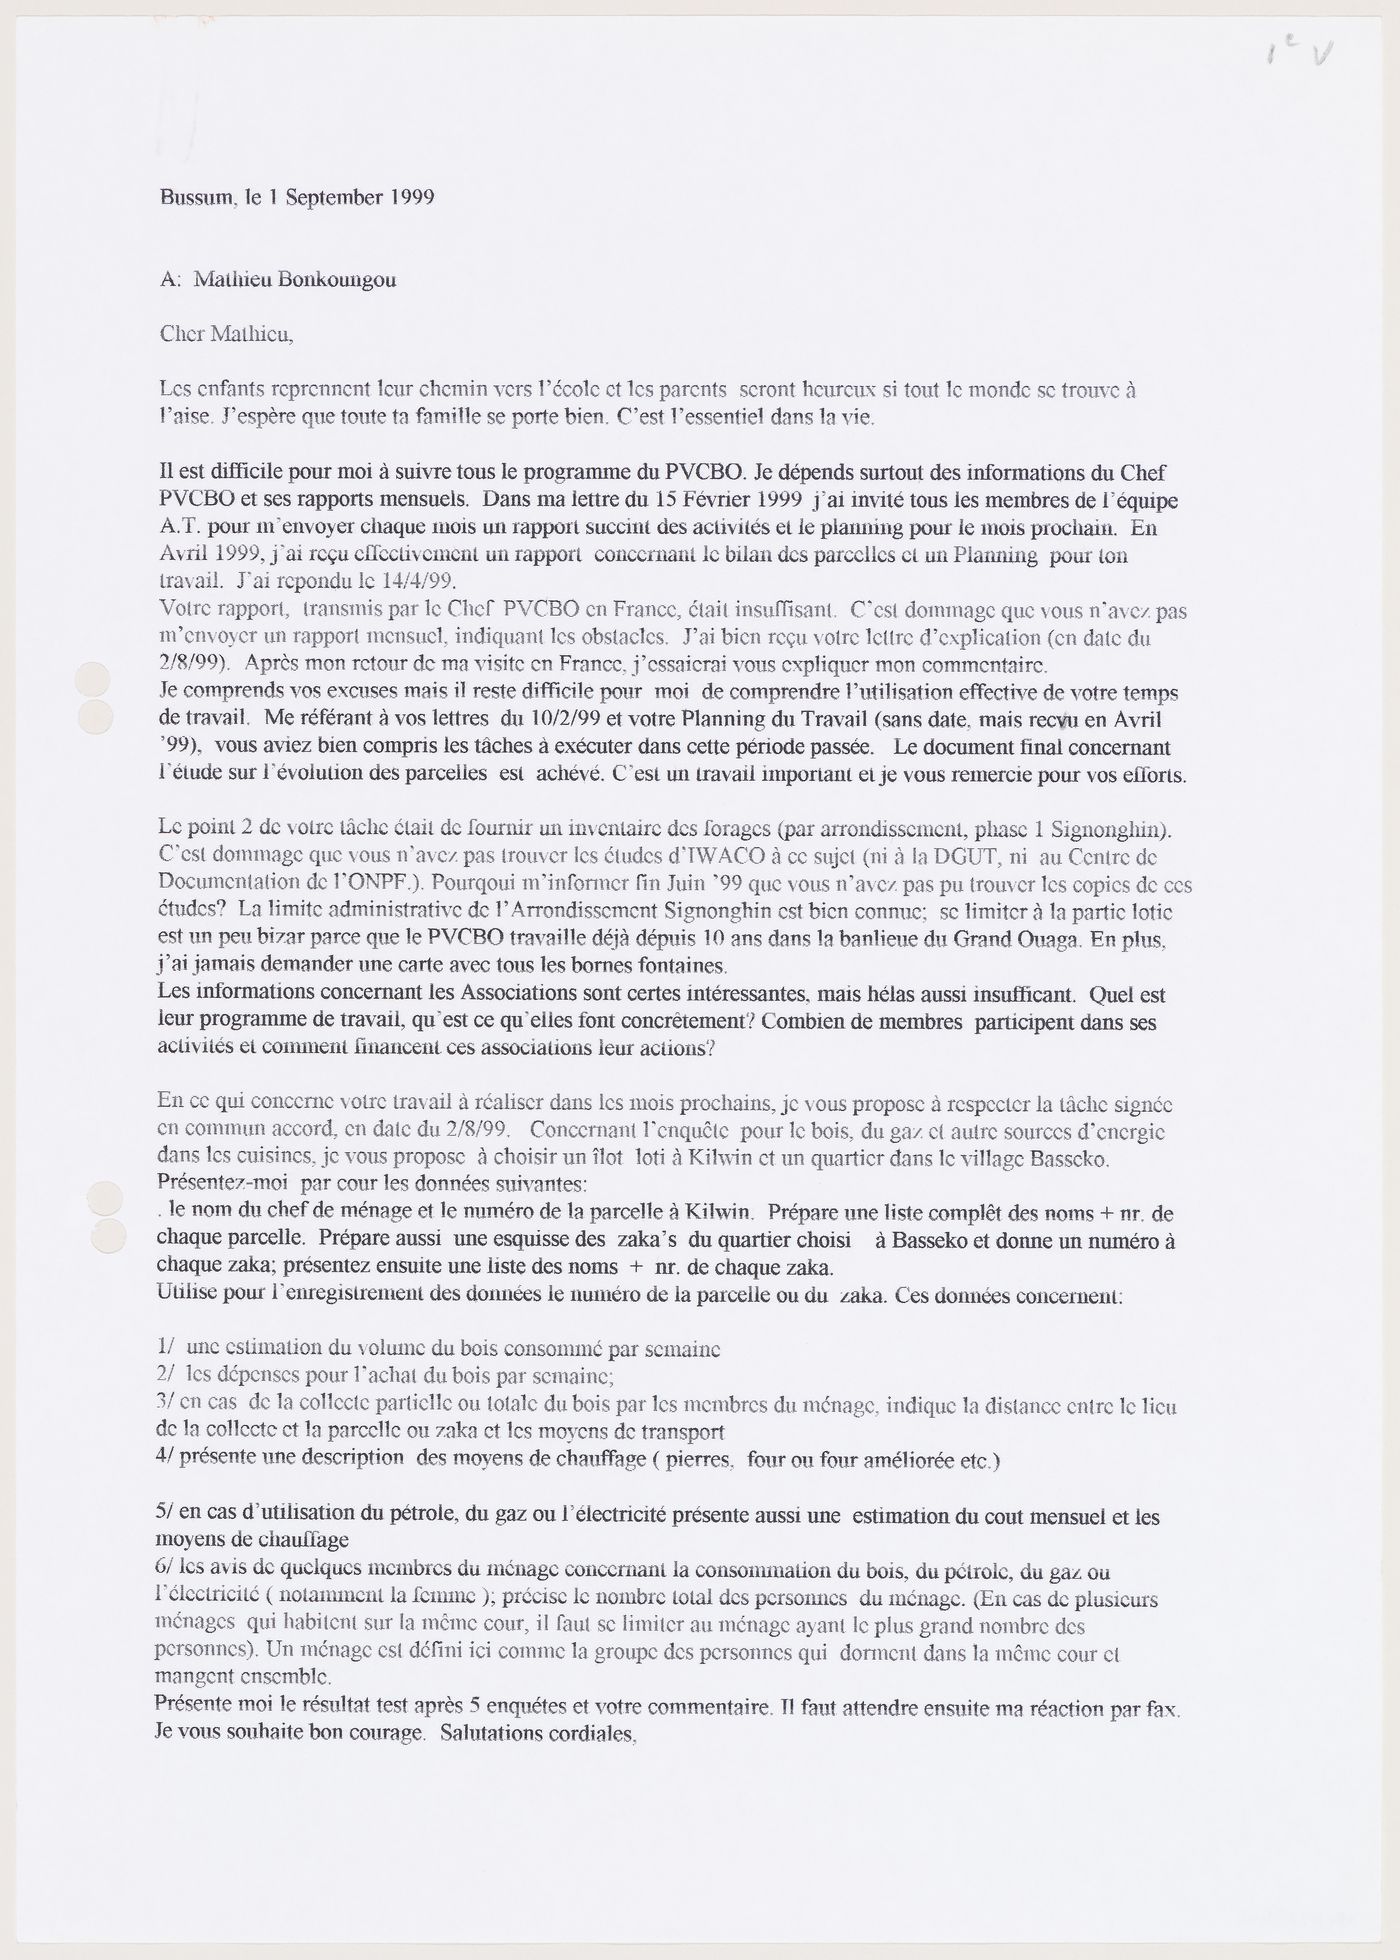 Two pages letter of Coen Beeker to Mathieu Bonkougou about drilling in a suburb of Ouagadougou, Burkina Faso